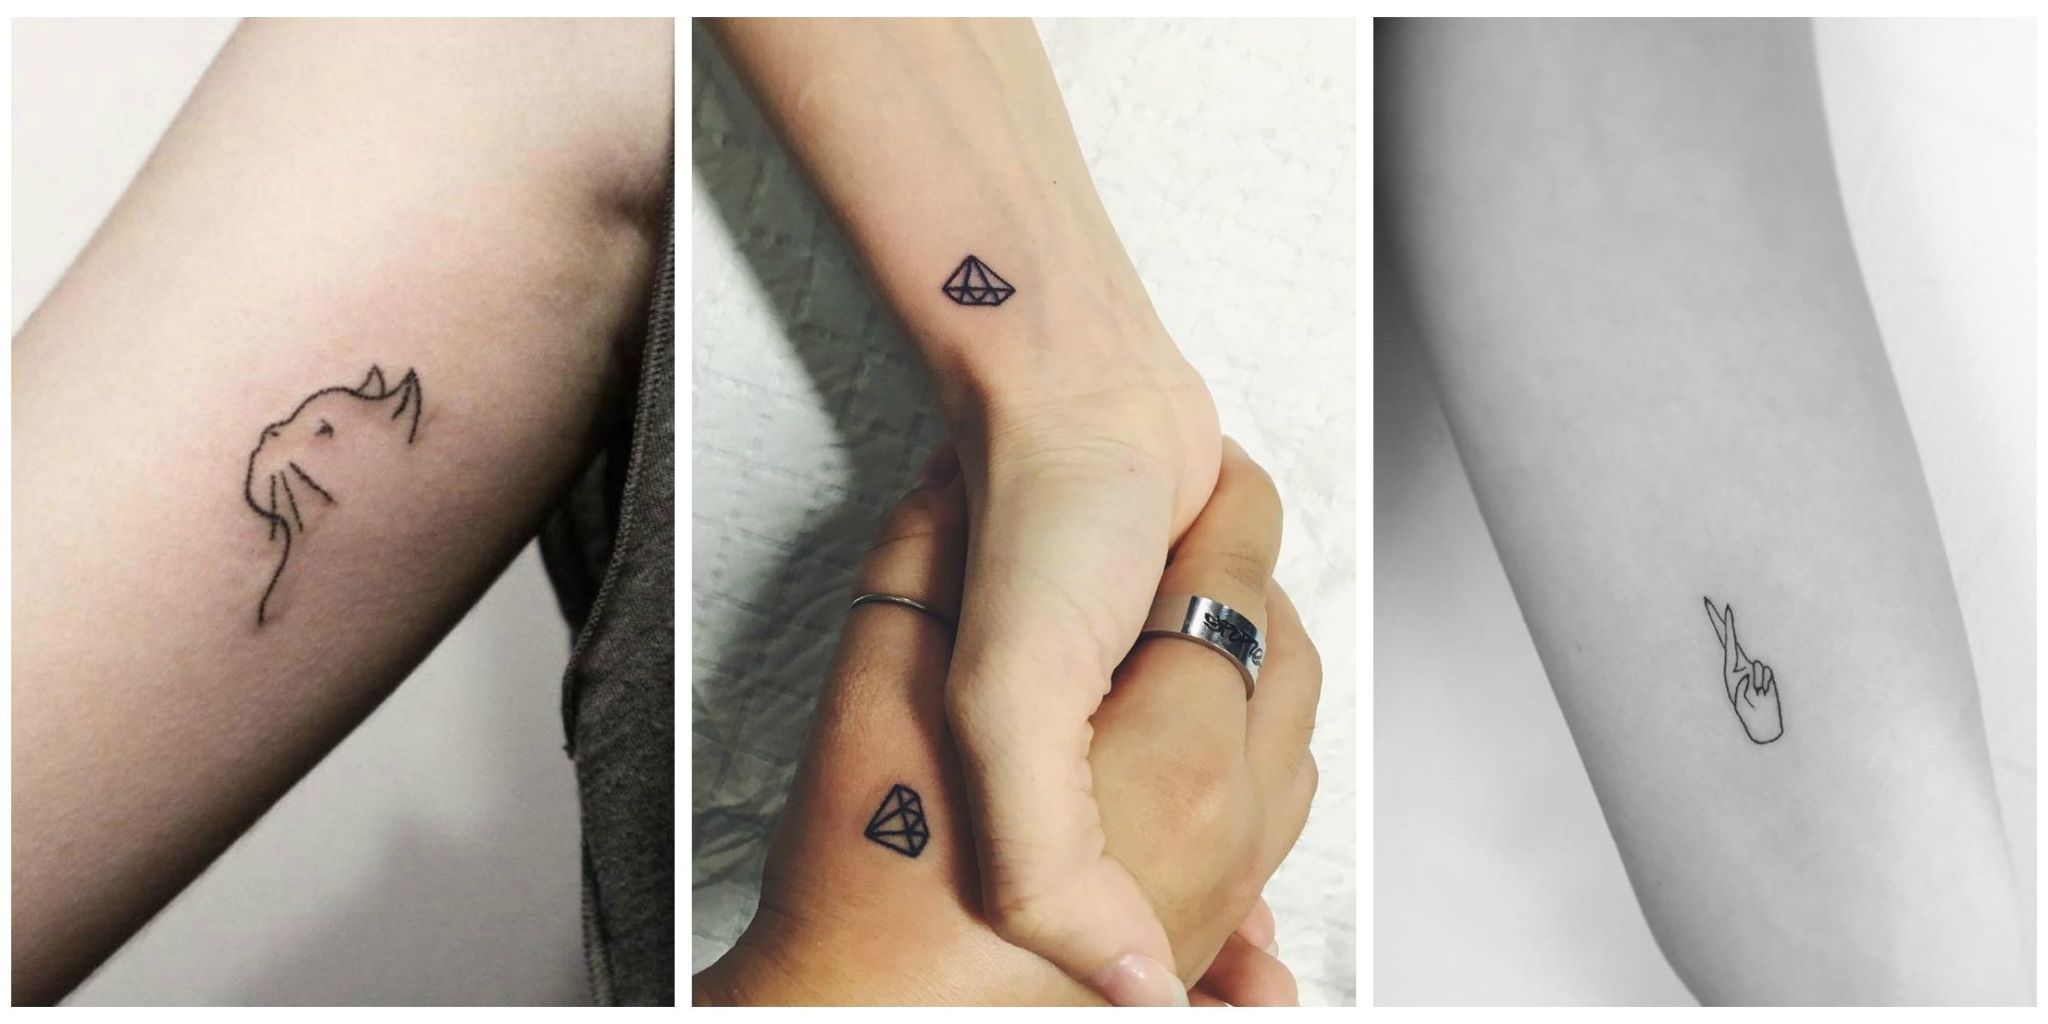 Cute tiny tattoo ideas